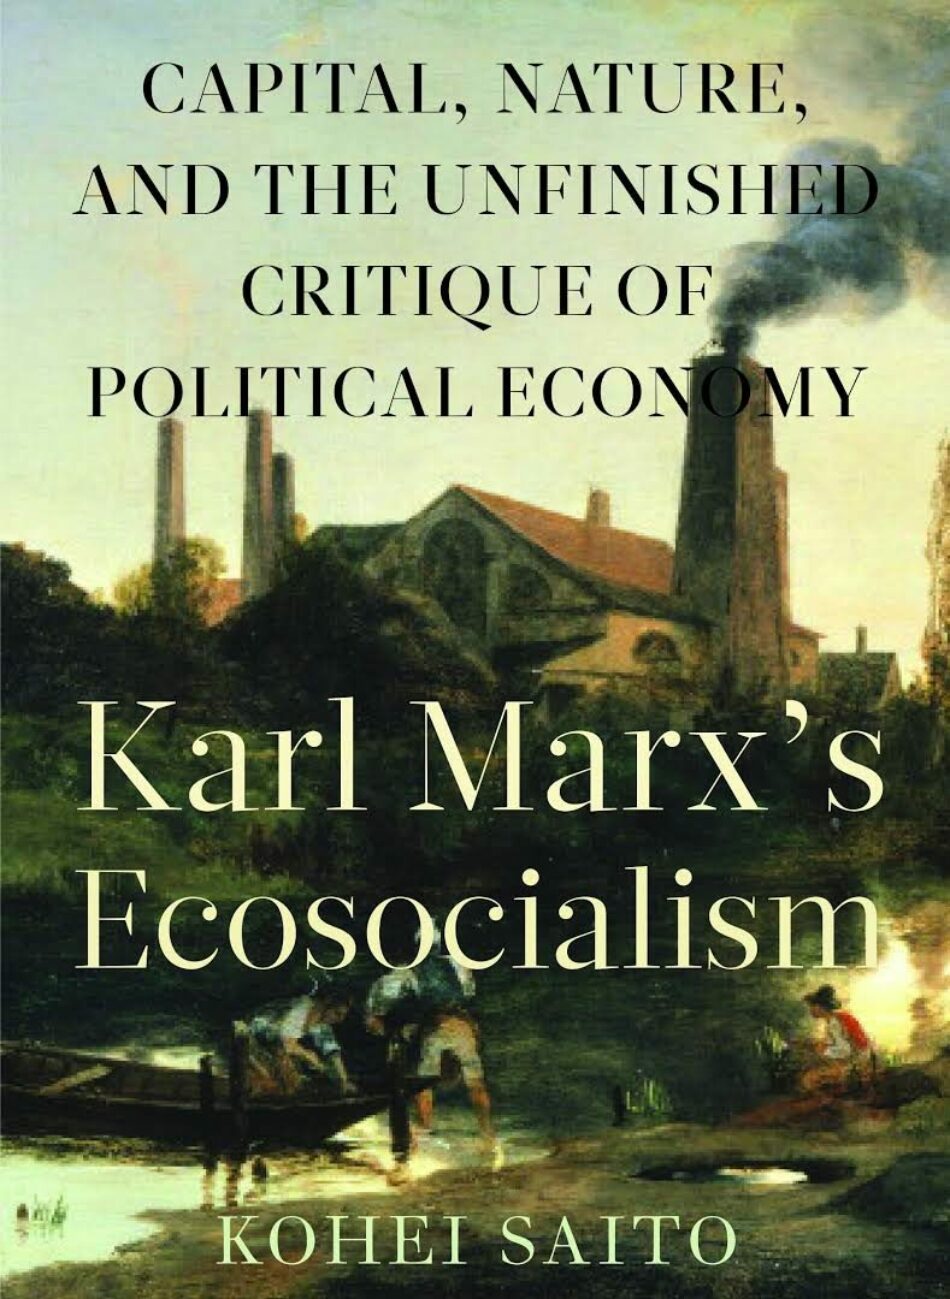 ¿Era Marx eco-socialista?